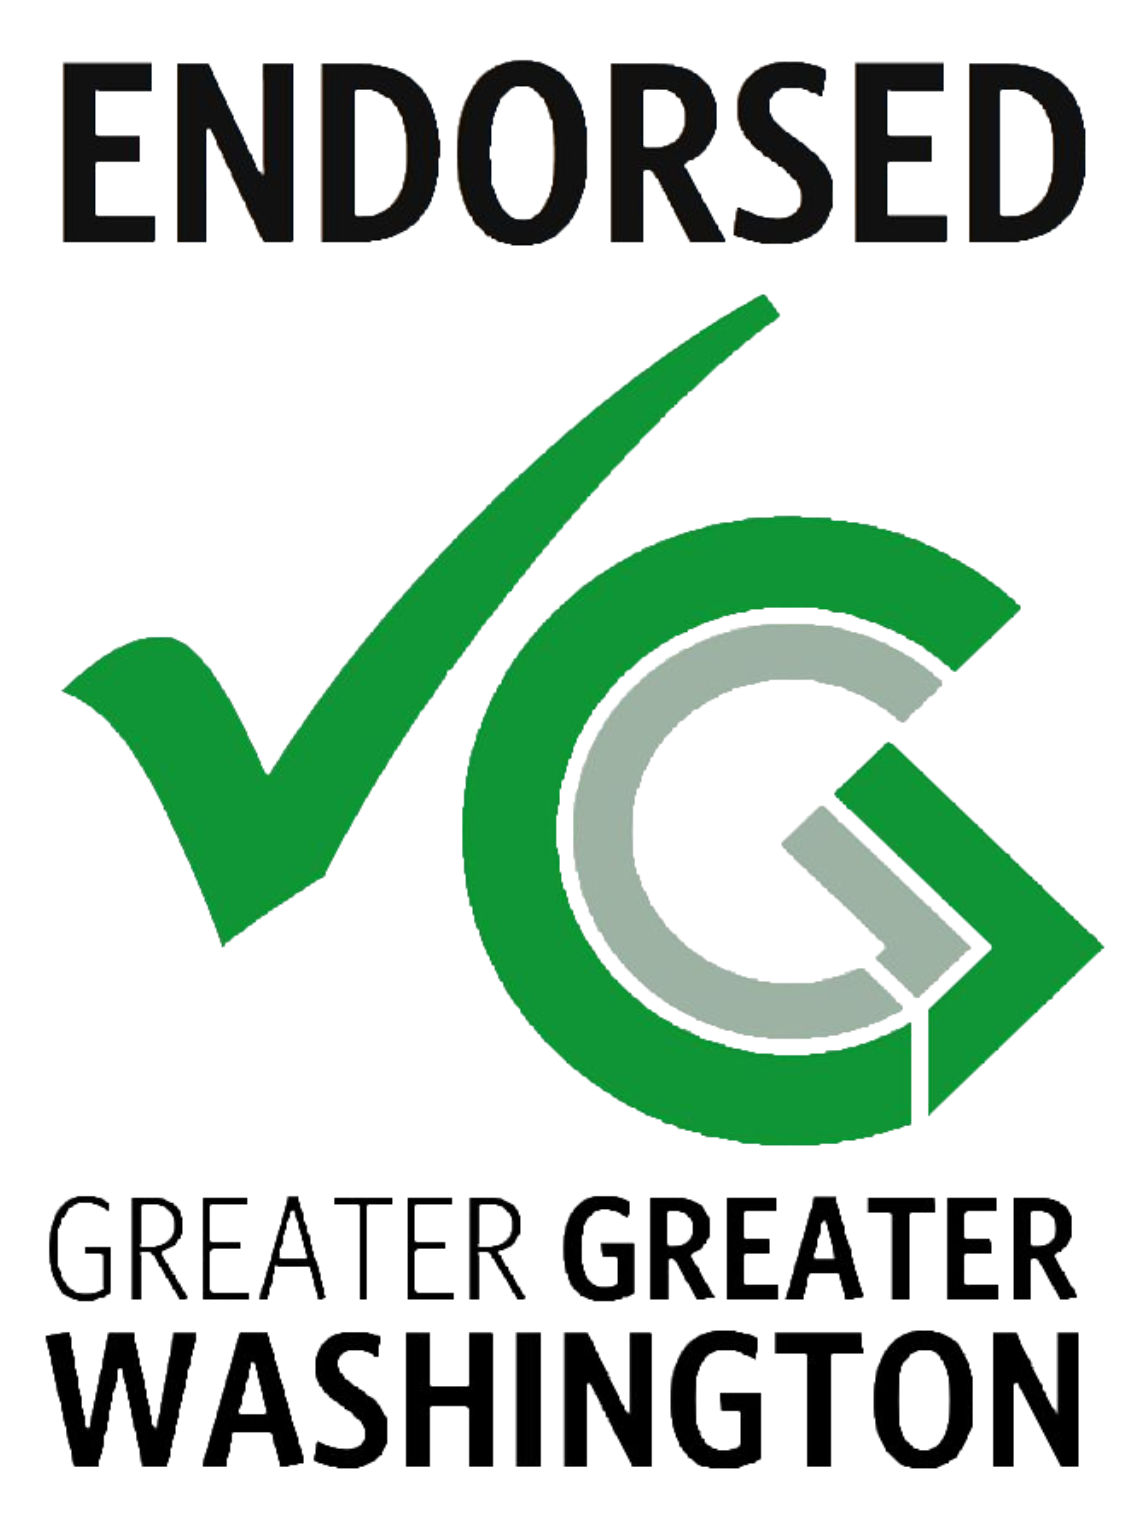 Greater Greater Washington logo